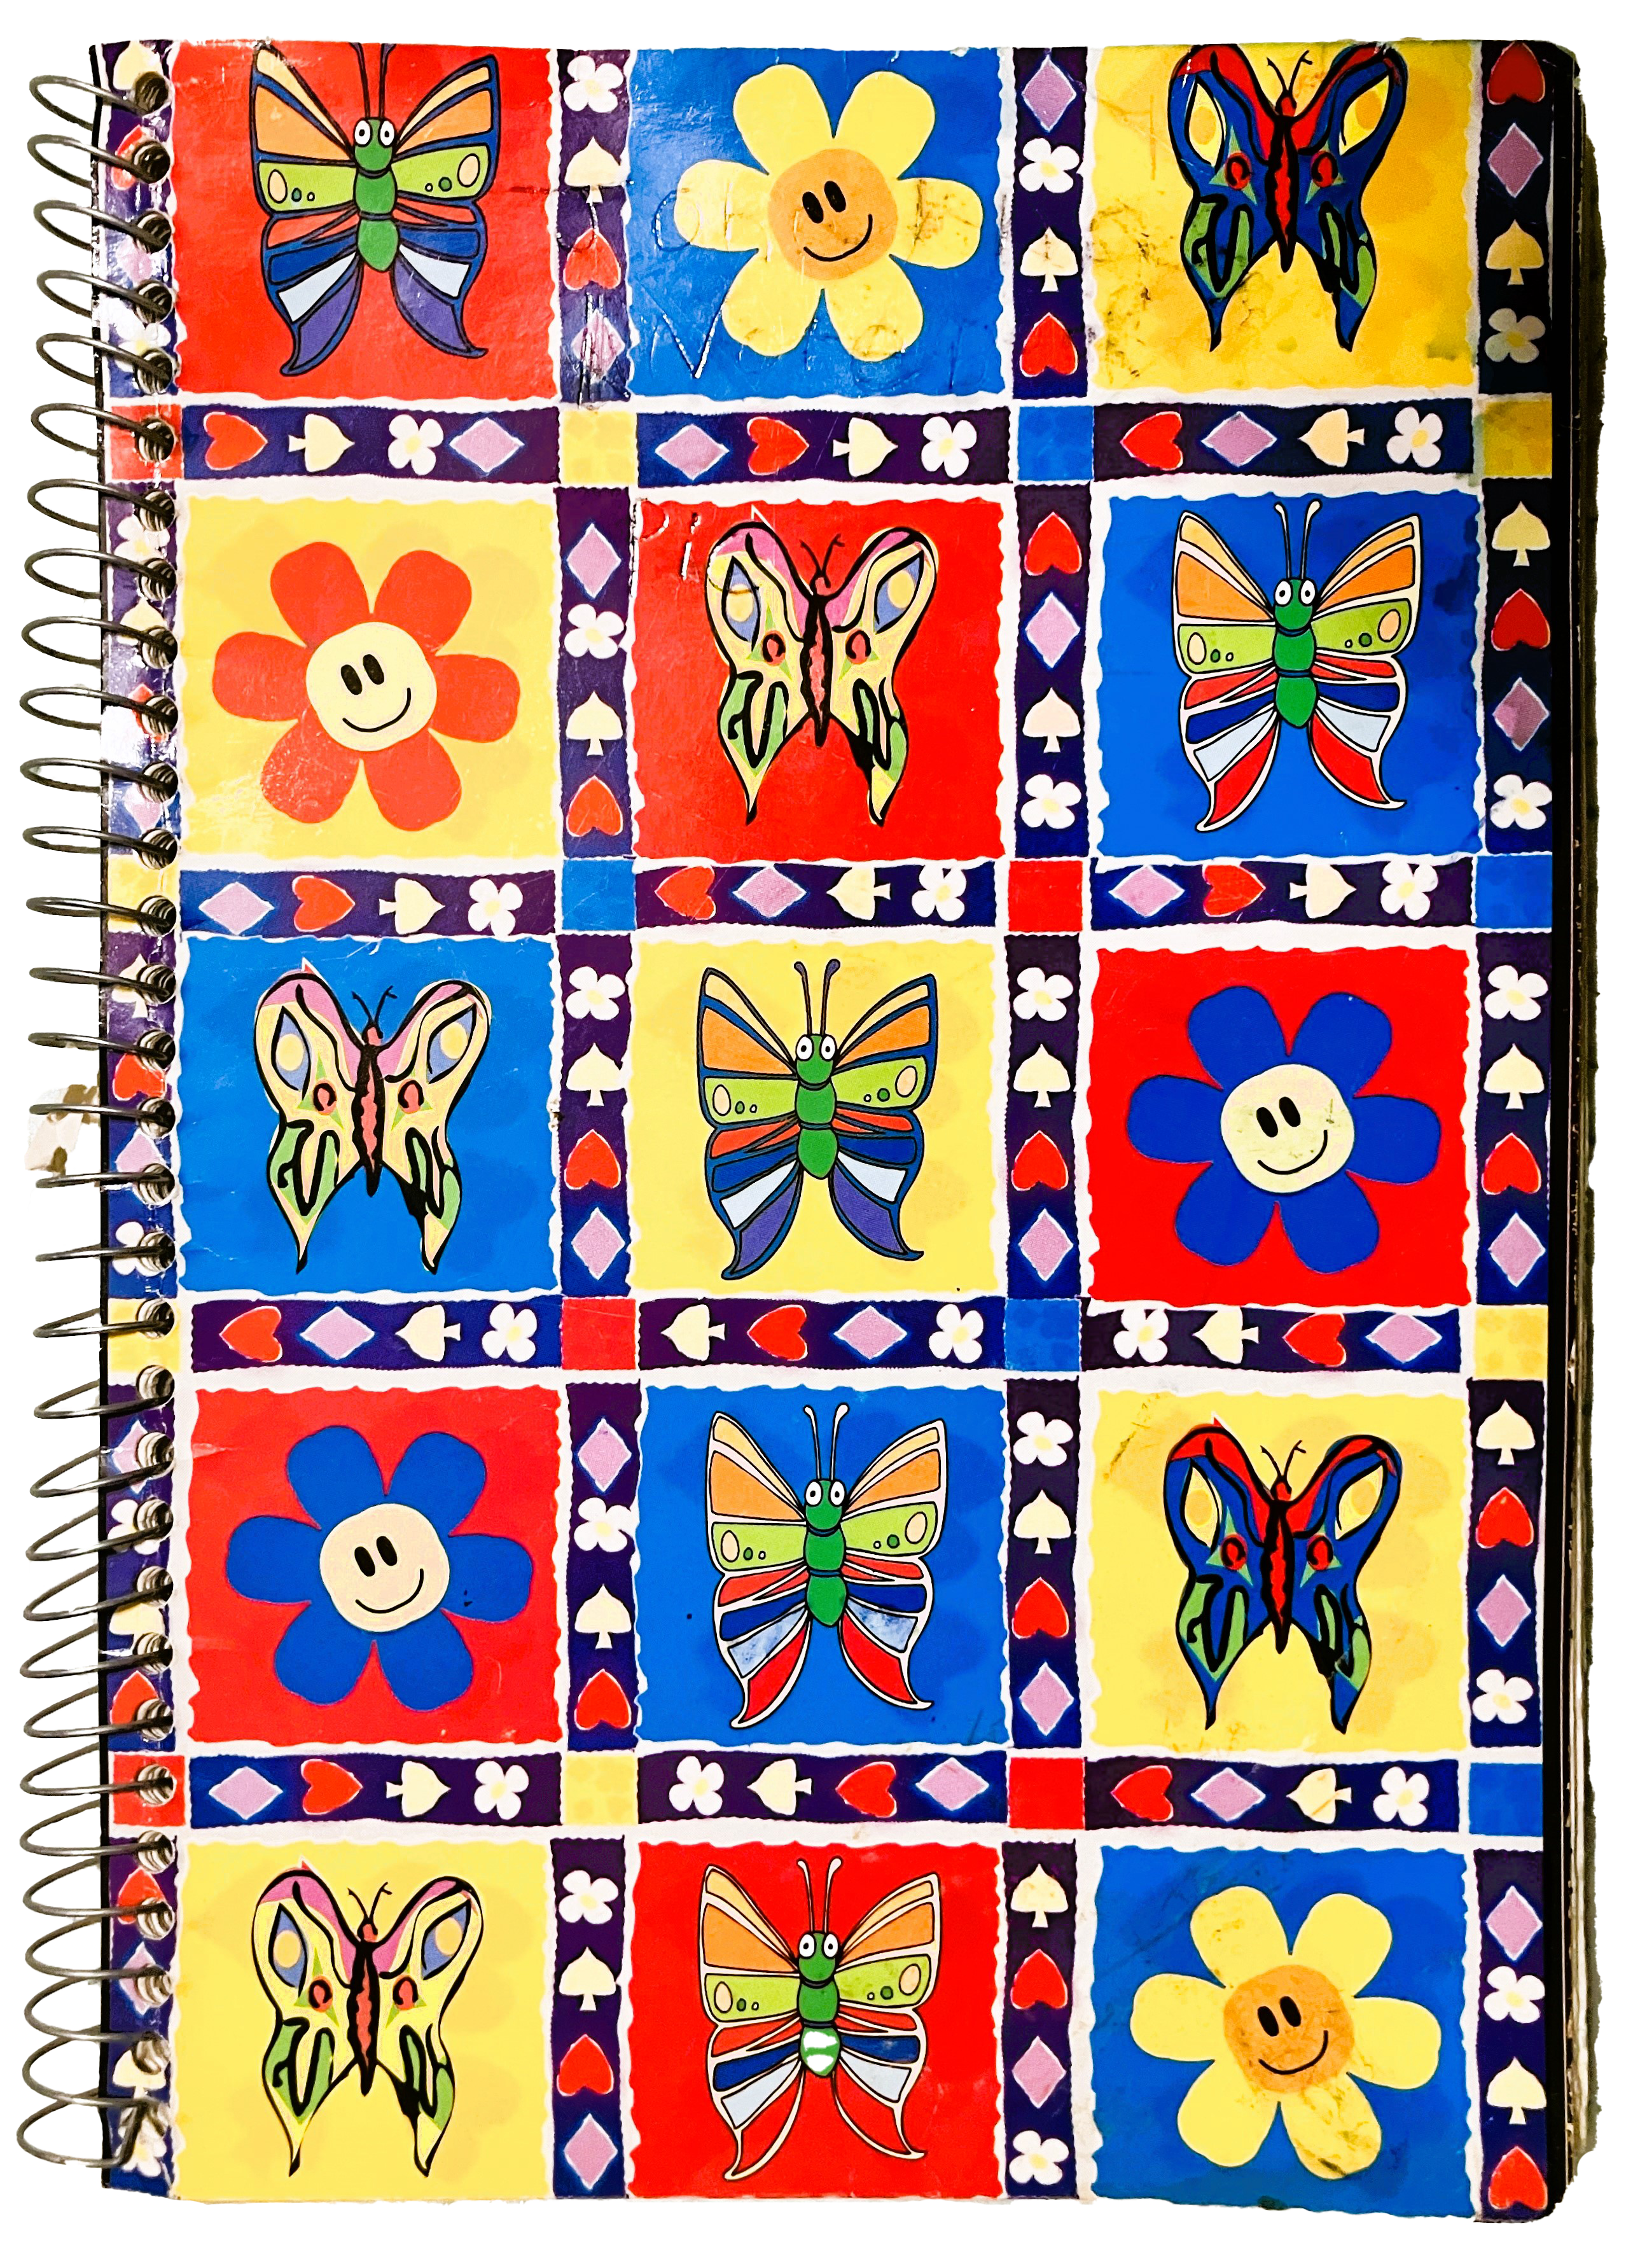 my notebook